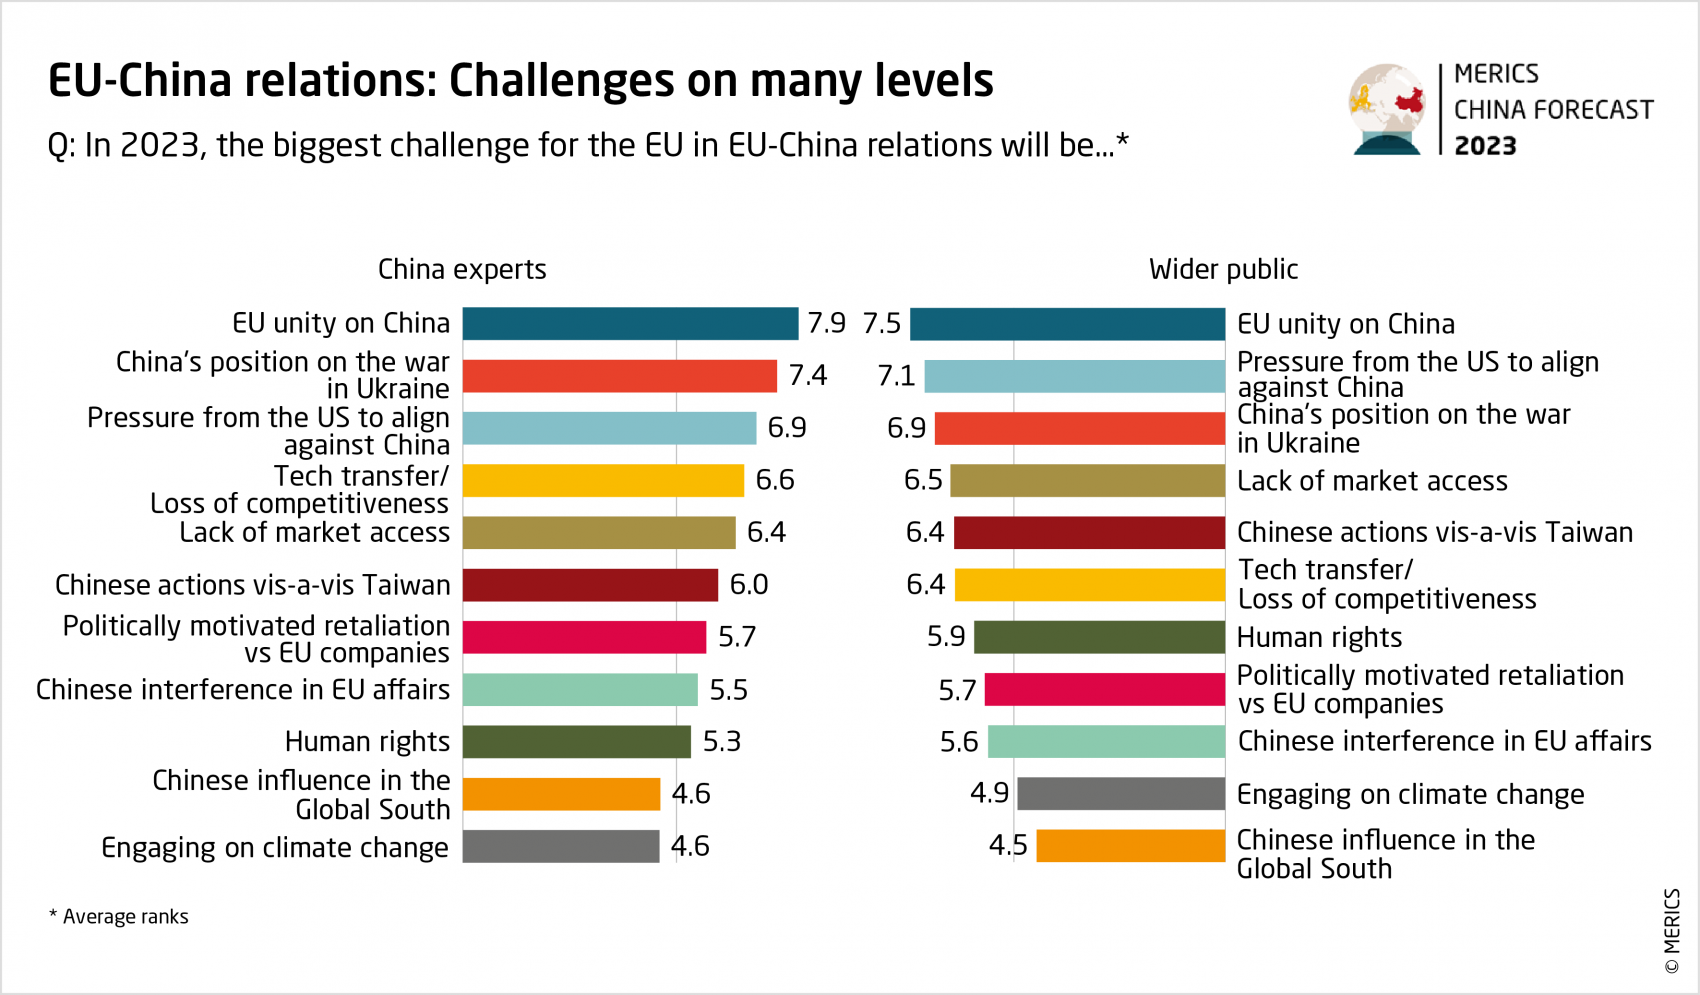 MERICS-China-Forecast-2023-EU-China-relations-challenges